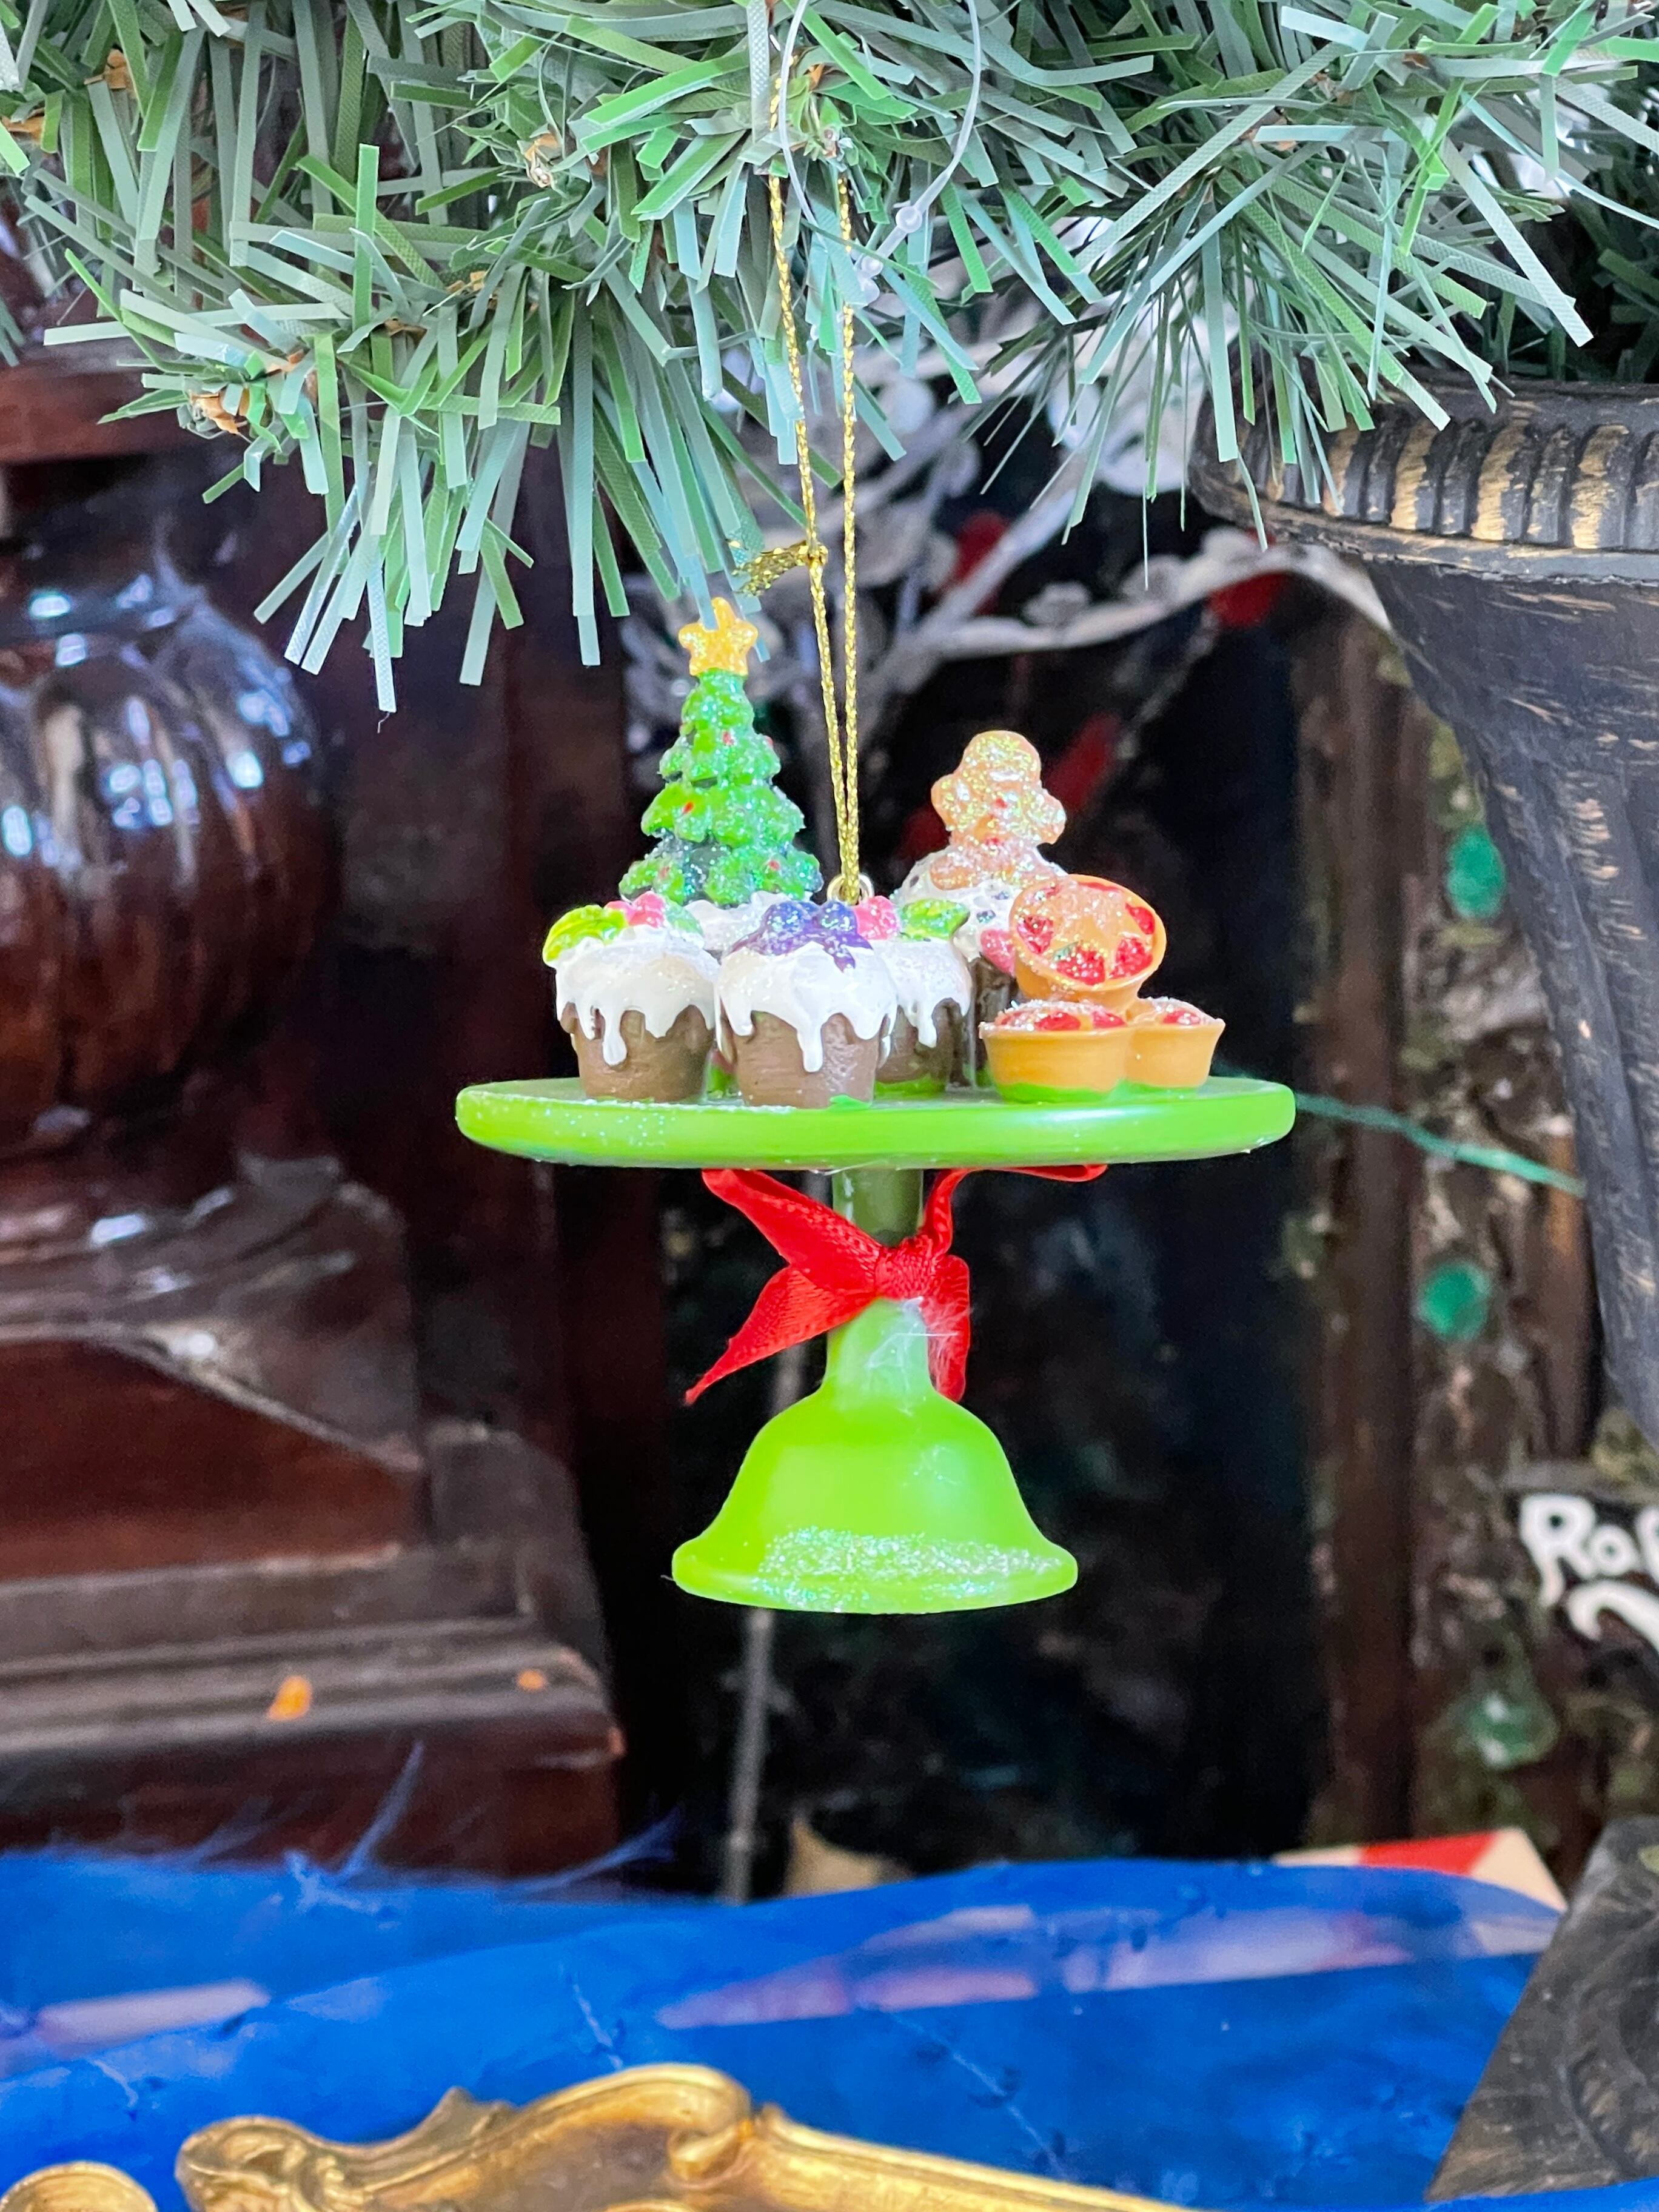 『GISRLA GRAHAM』London クリスマスケーキテーブル オーナメント Christmas Cake on a Stand decoration イギリス製